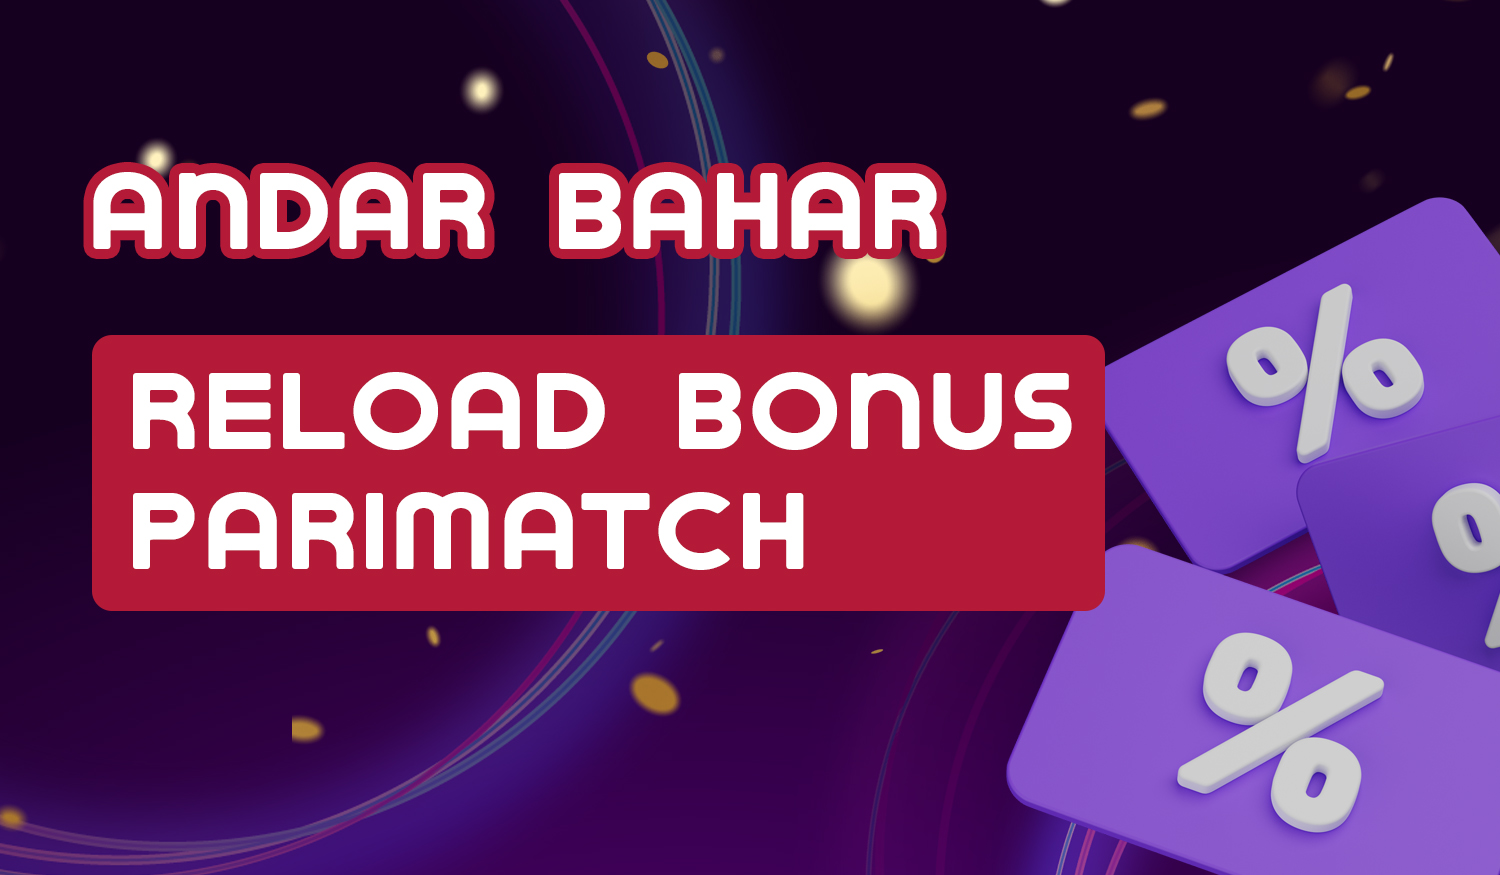 Reload bonus from Parimatch for Indian online casino fans 